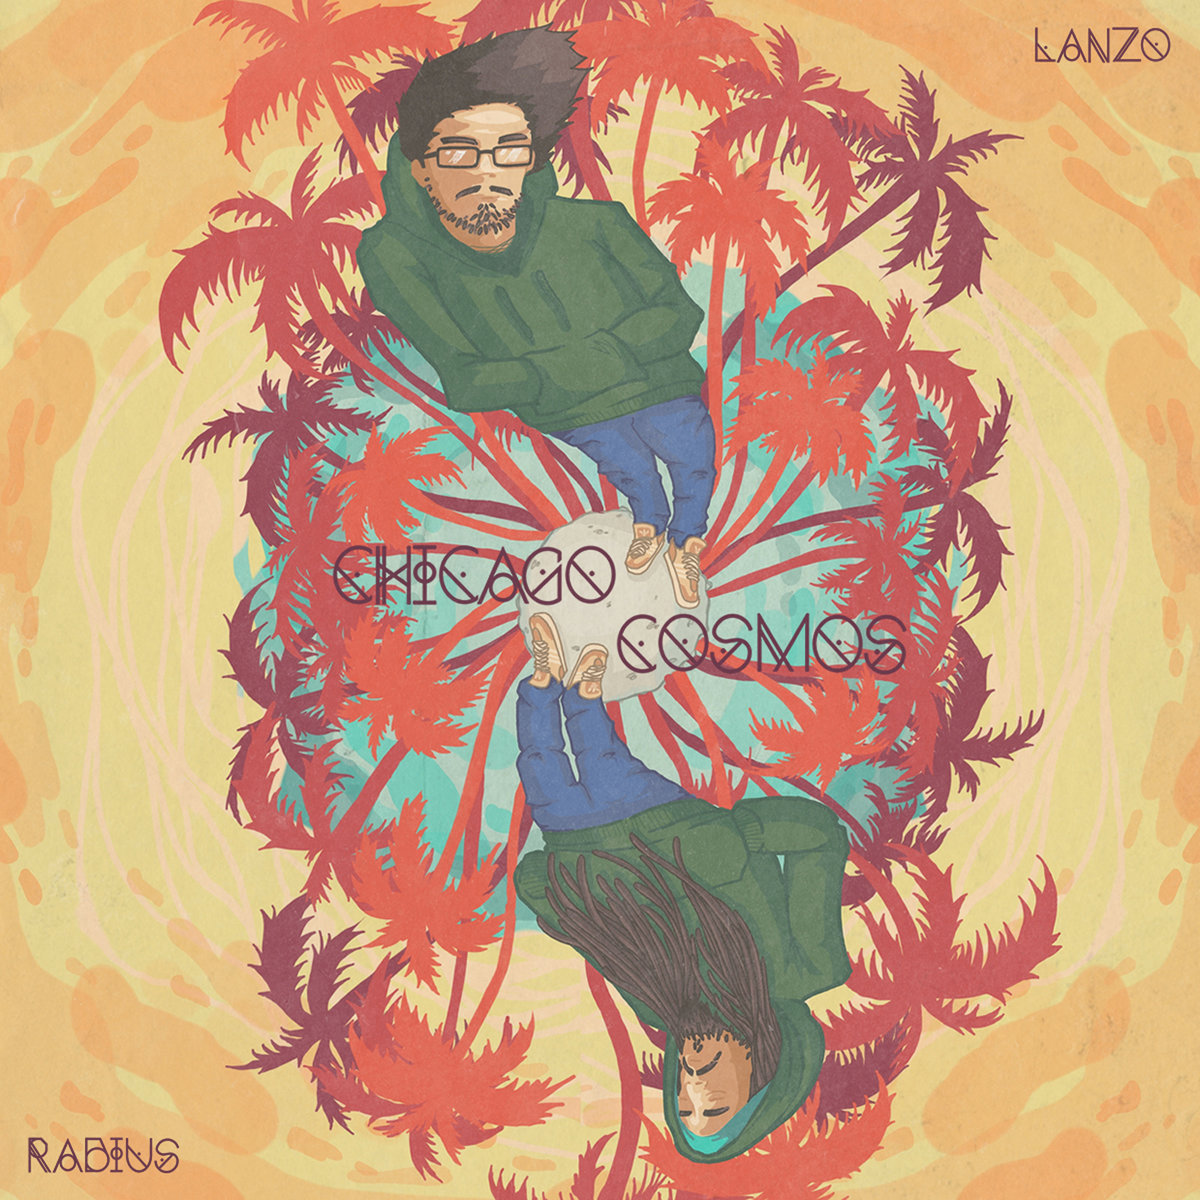 Radius & Lanzo - "Chicago Cosmos" (Release)